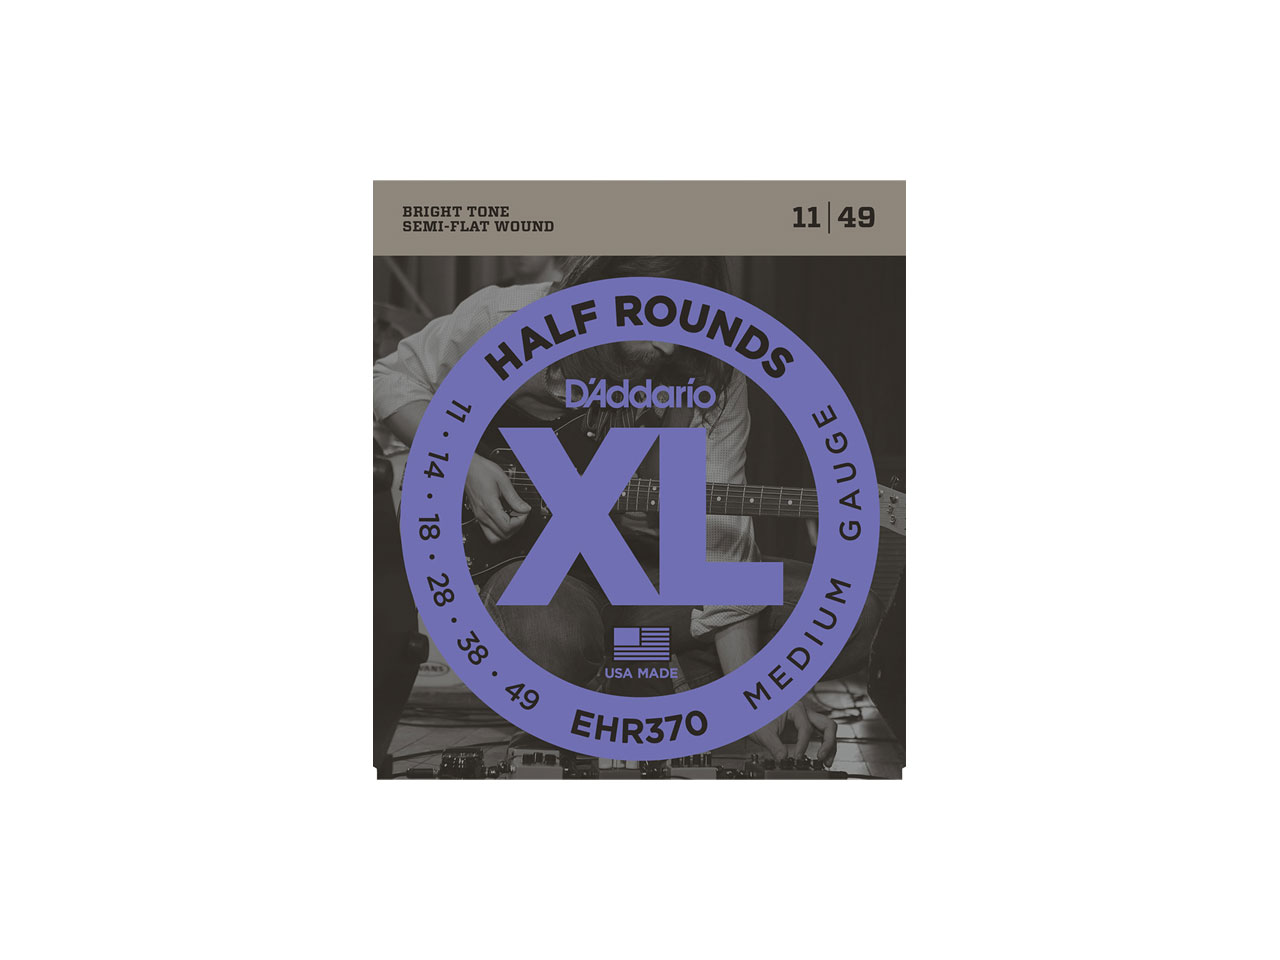 D'Addario(ダダリオ) XL Half Rounds Medium / EHR370 (エレキギター弦)